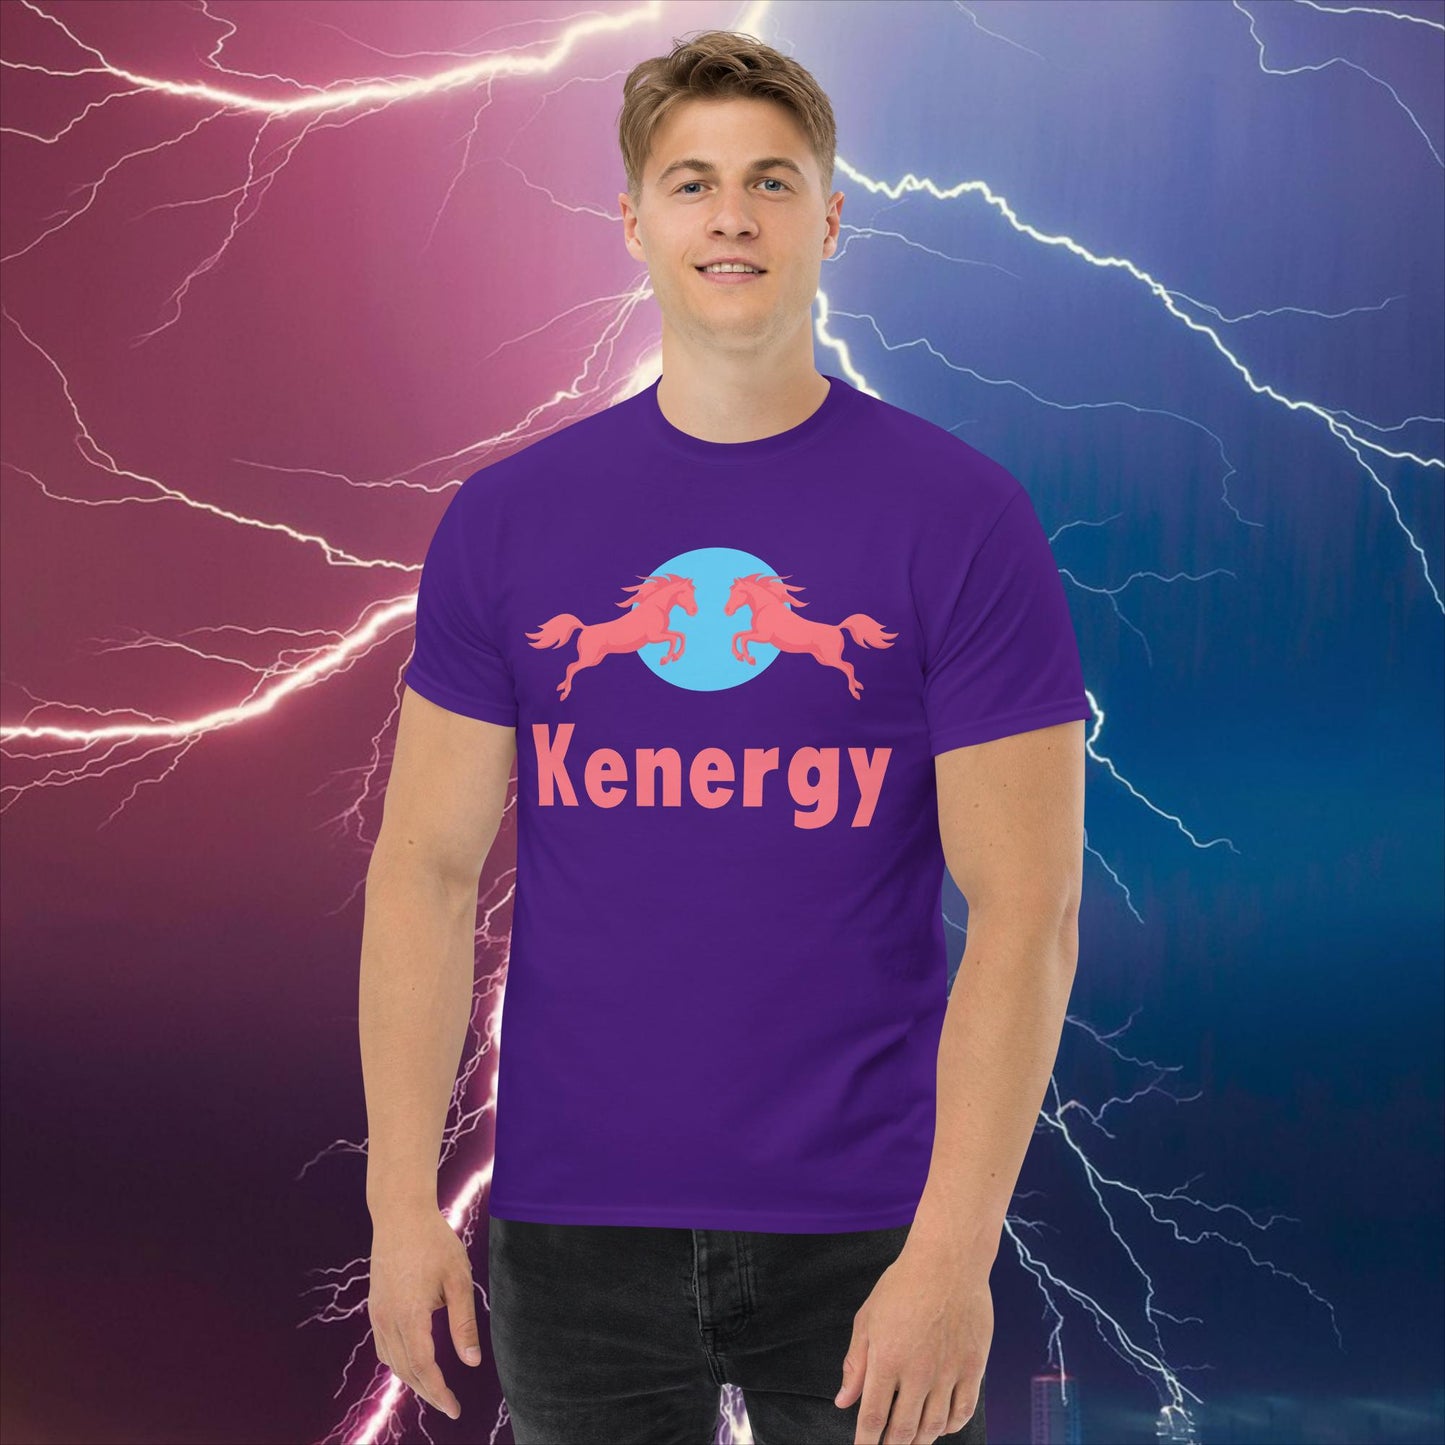 Kenergy Red Bull Ken Barbie Ryan Gosling Kenergy classic tee Next Cult Brand